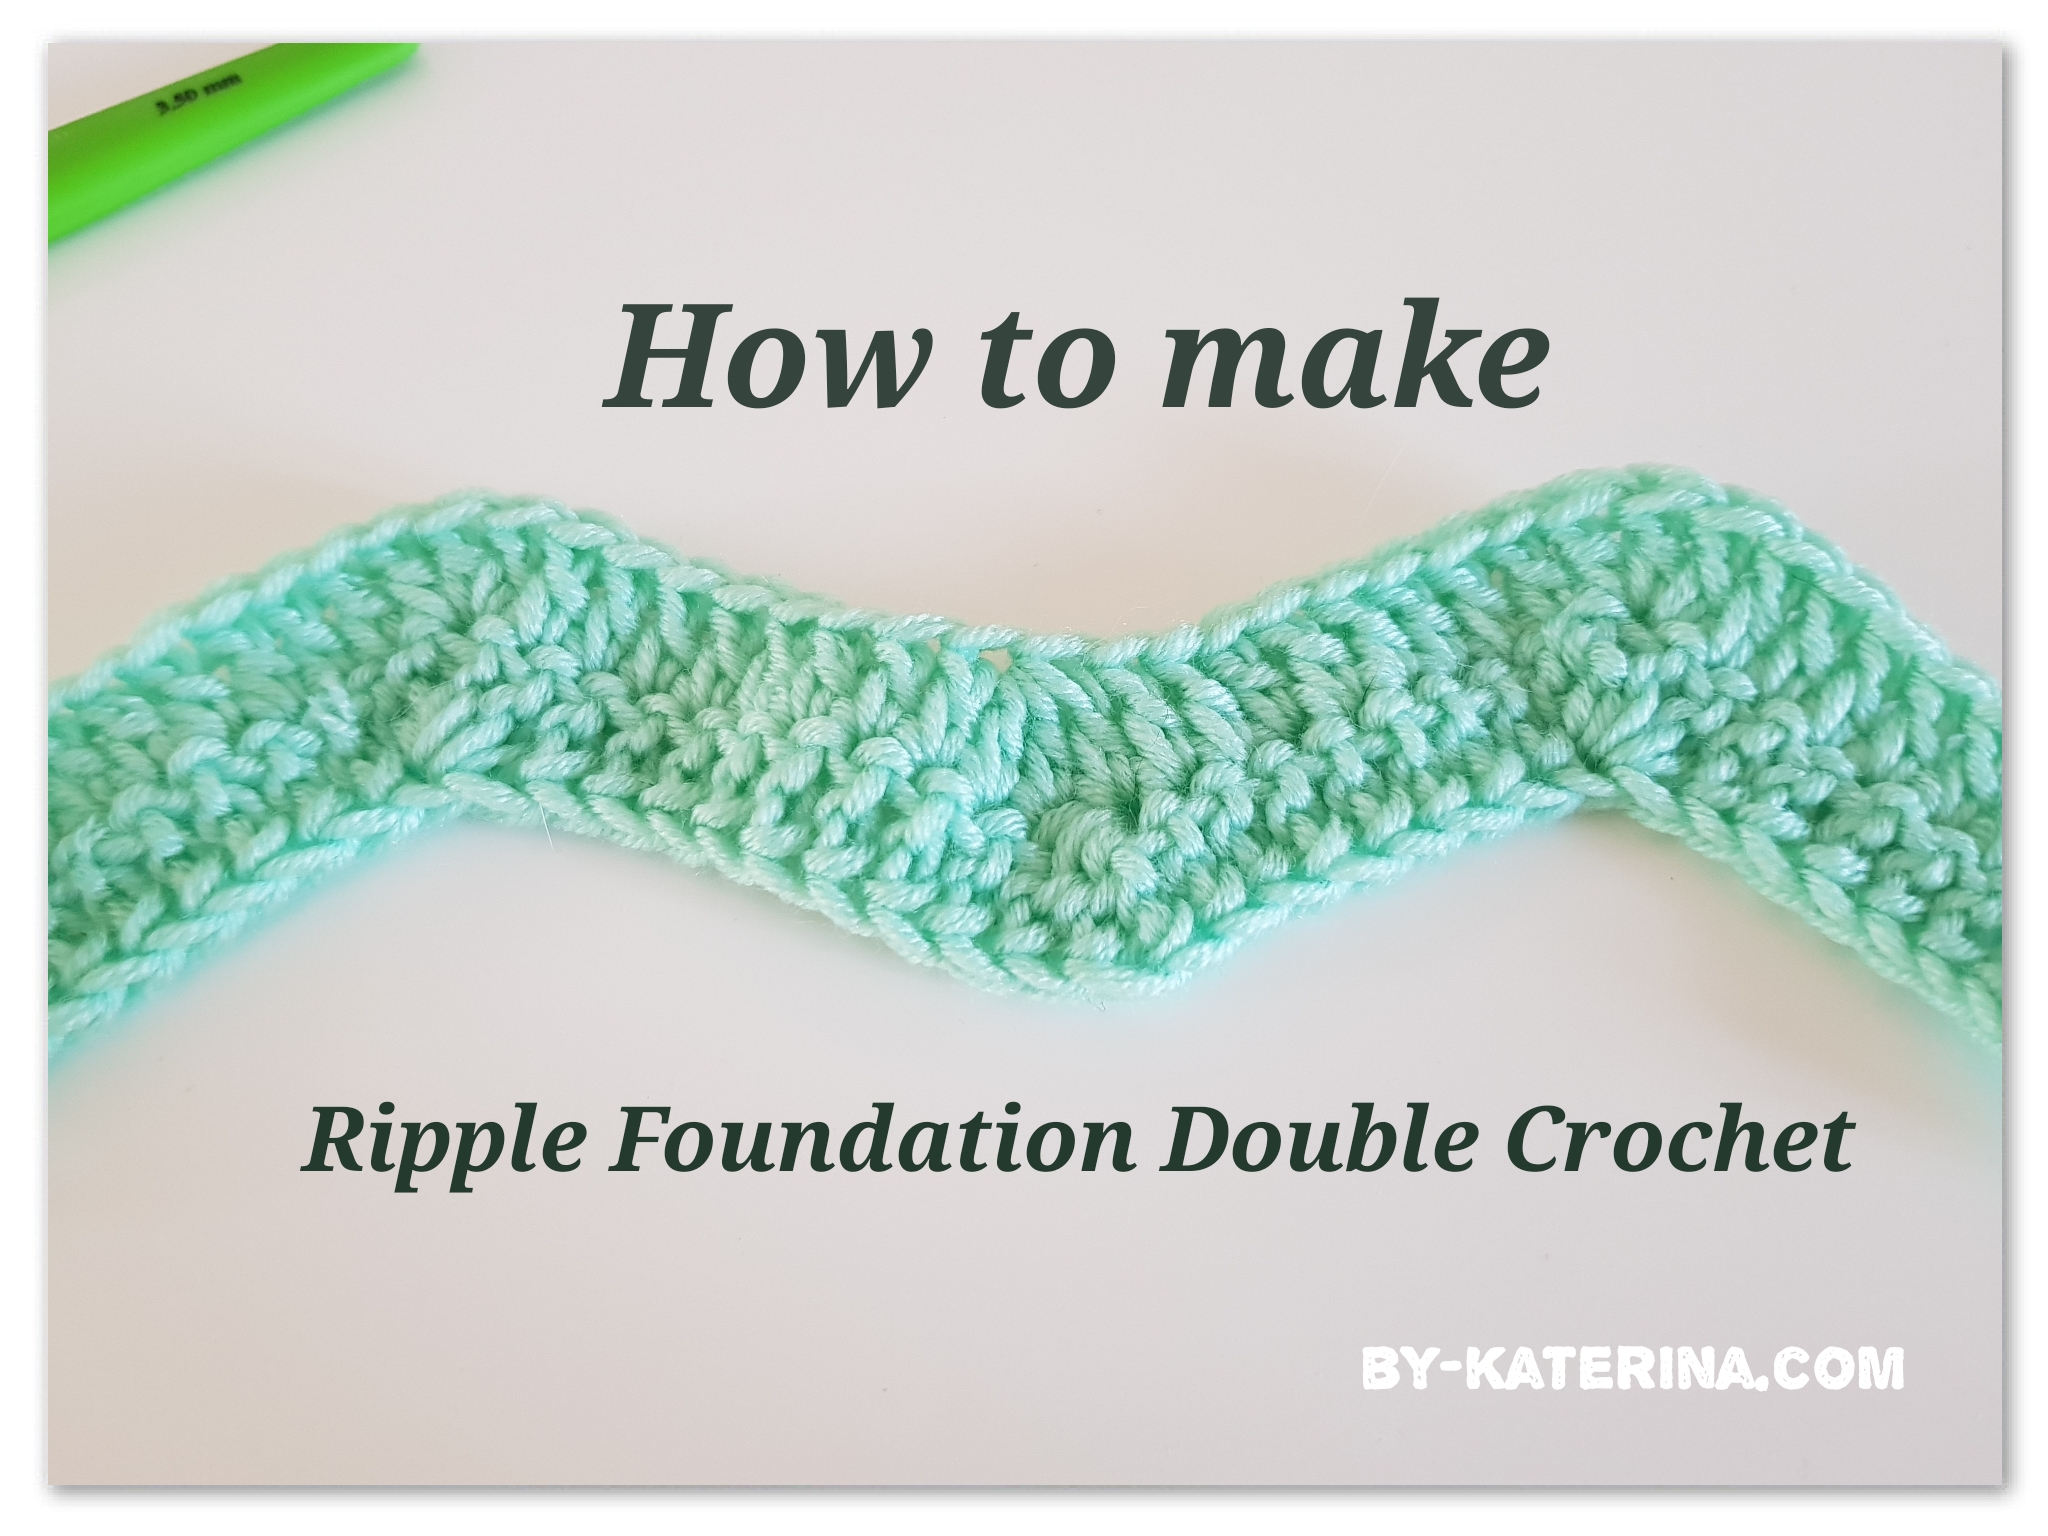 Ripple foundation double crochet